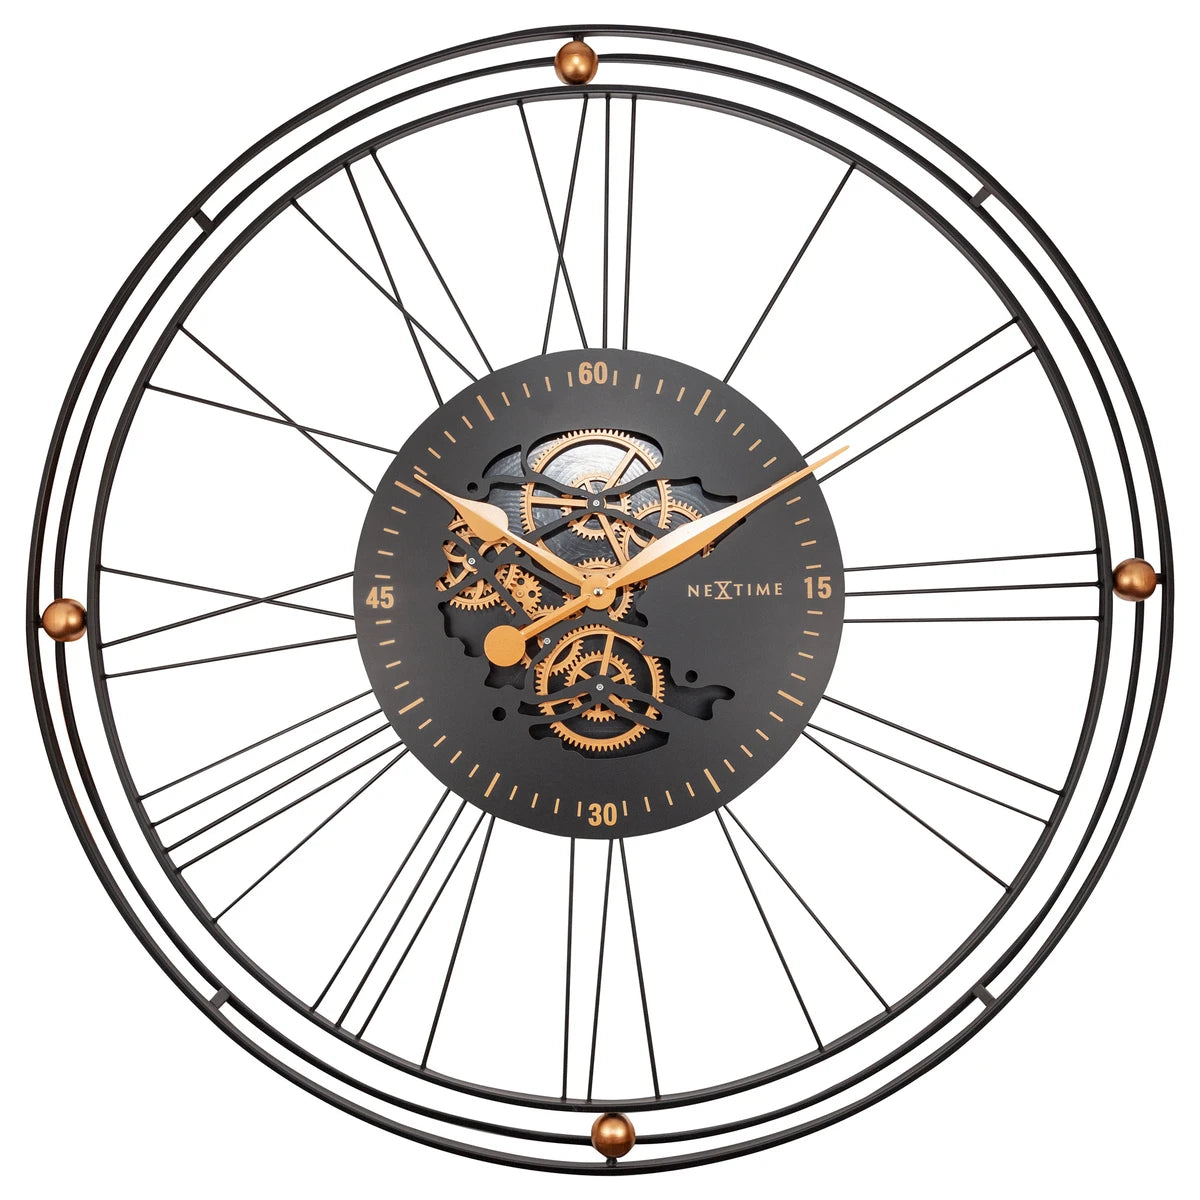 NEXTIME - Orologio da Parete Roman Gear Clock XXL 90,5cm